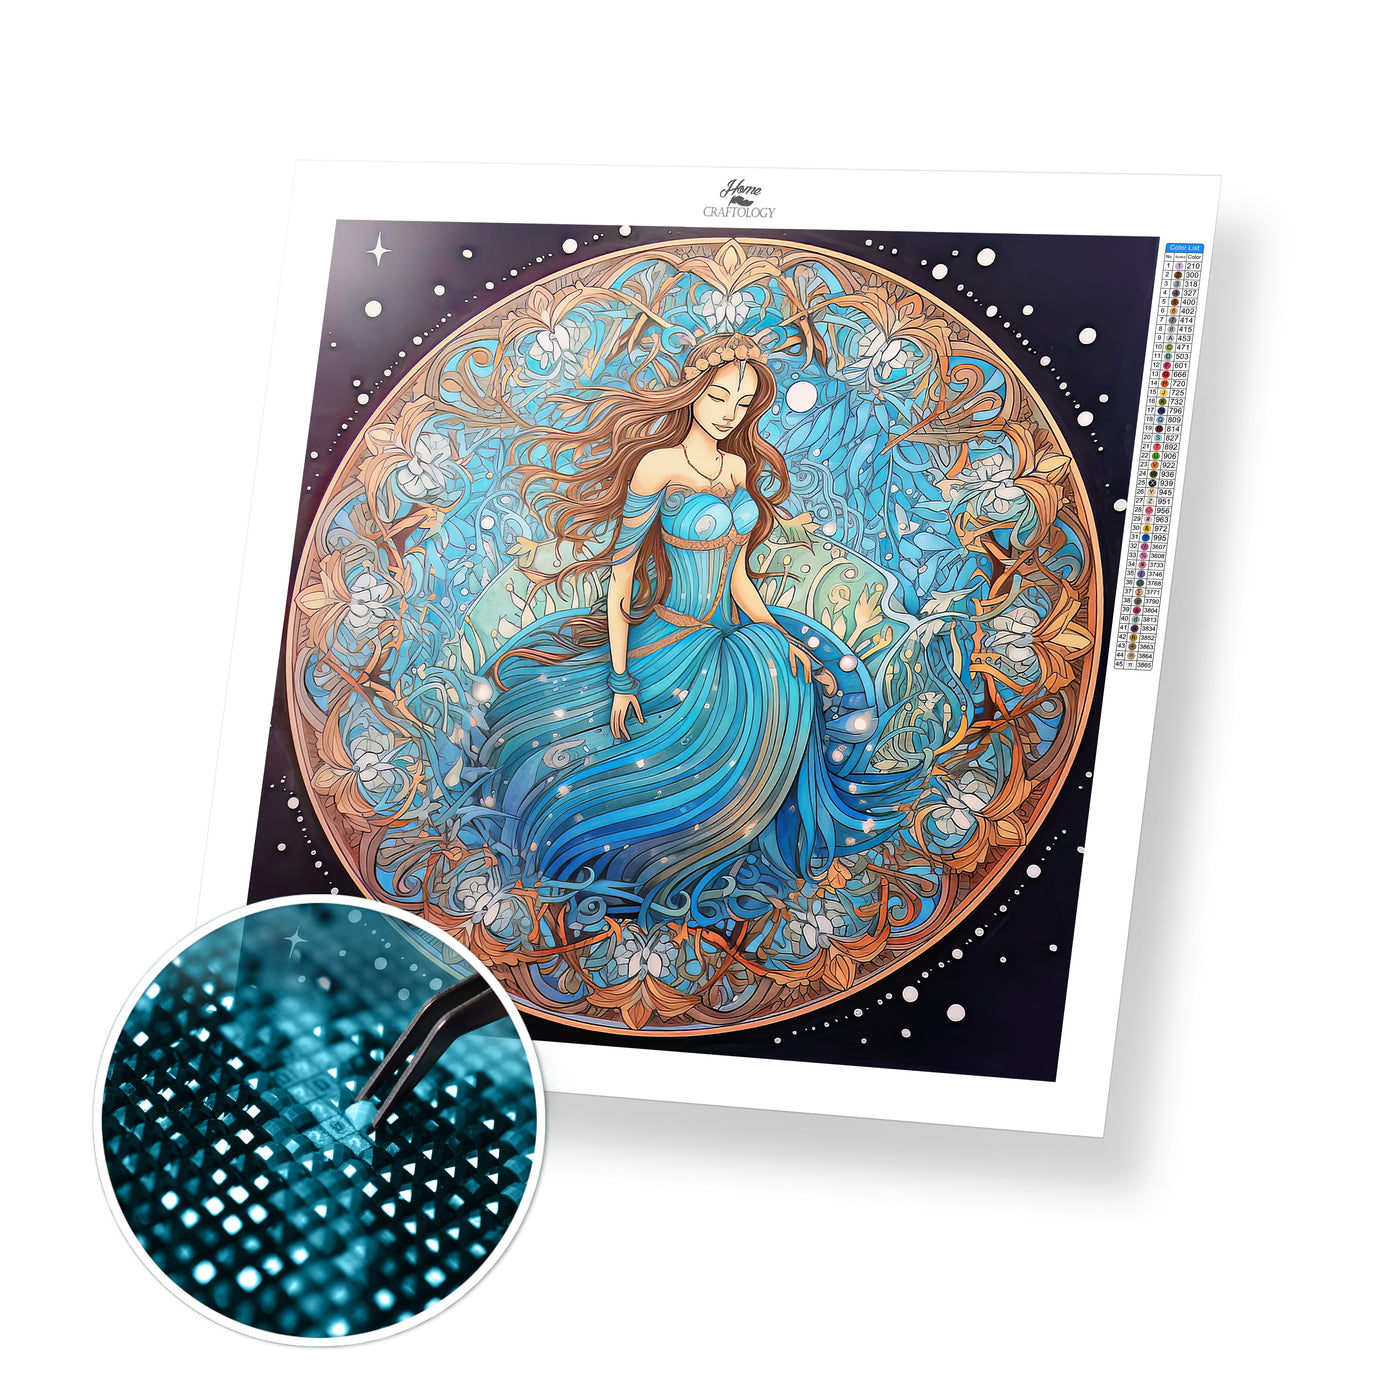 Princess in Blue Gown - Premium Diamond Painting Kit